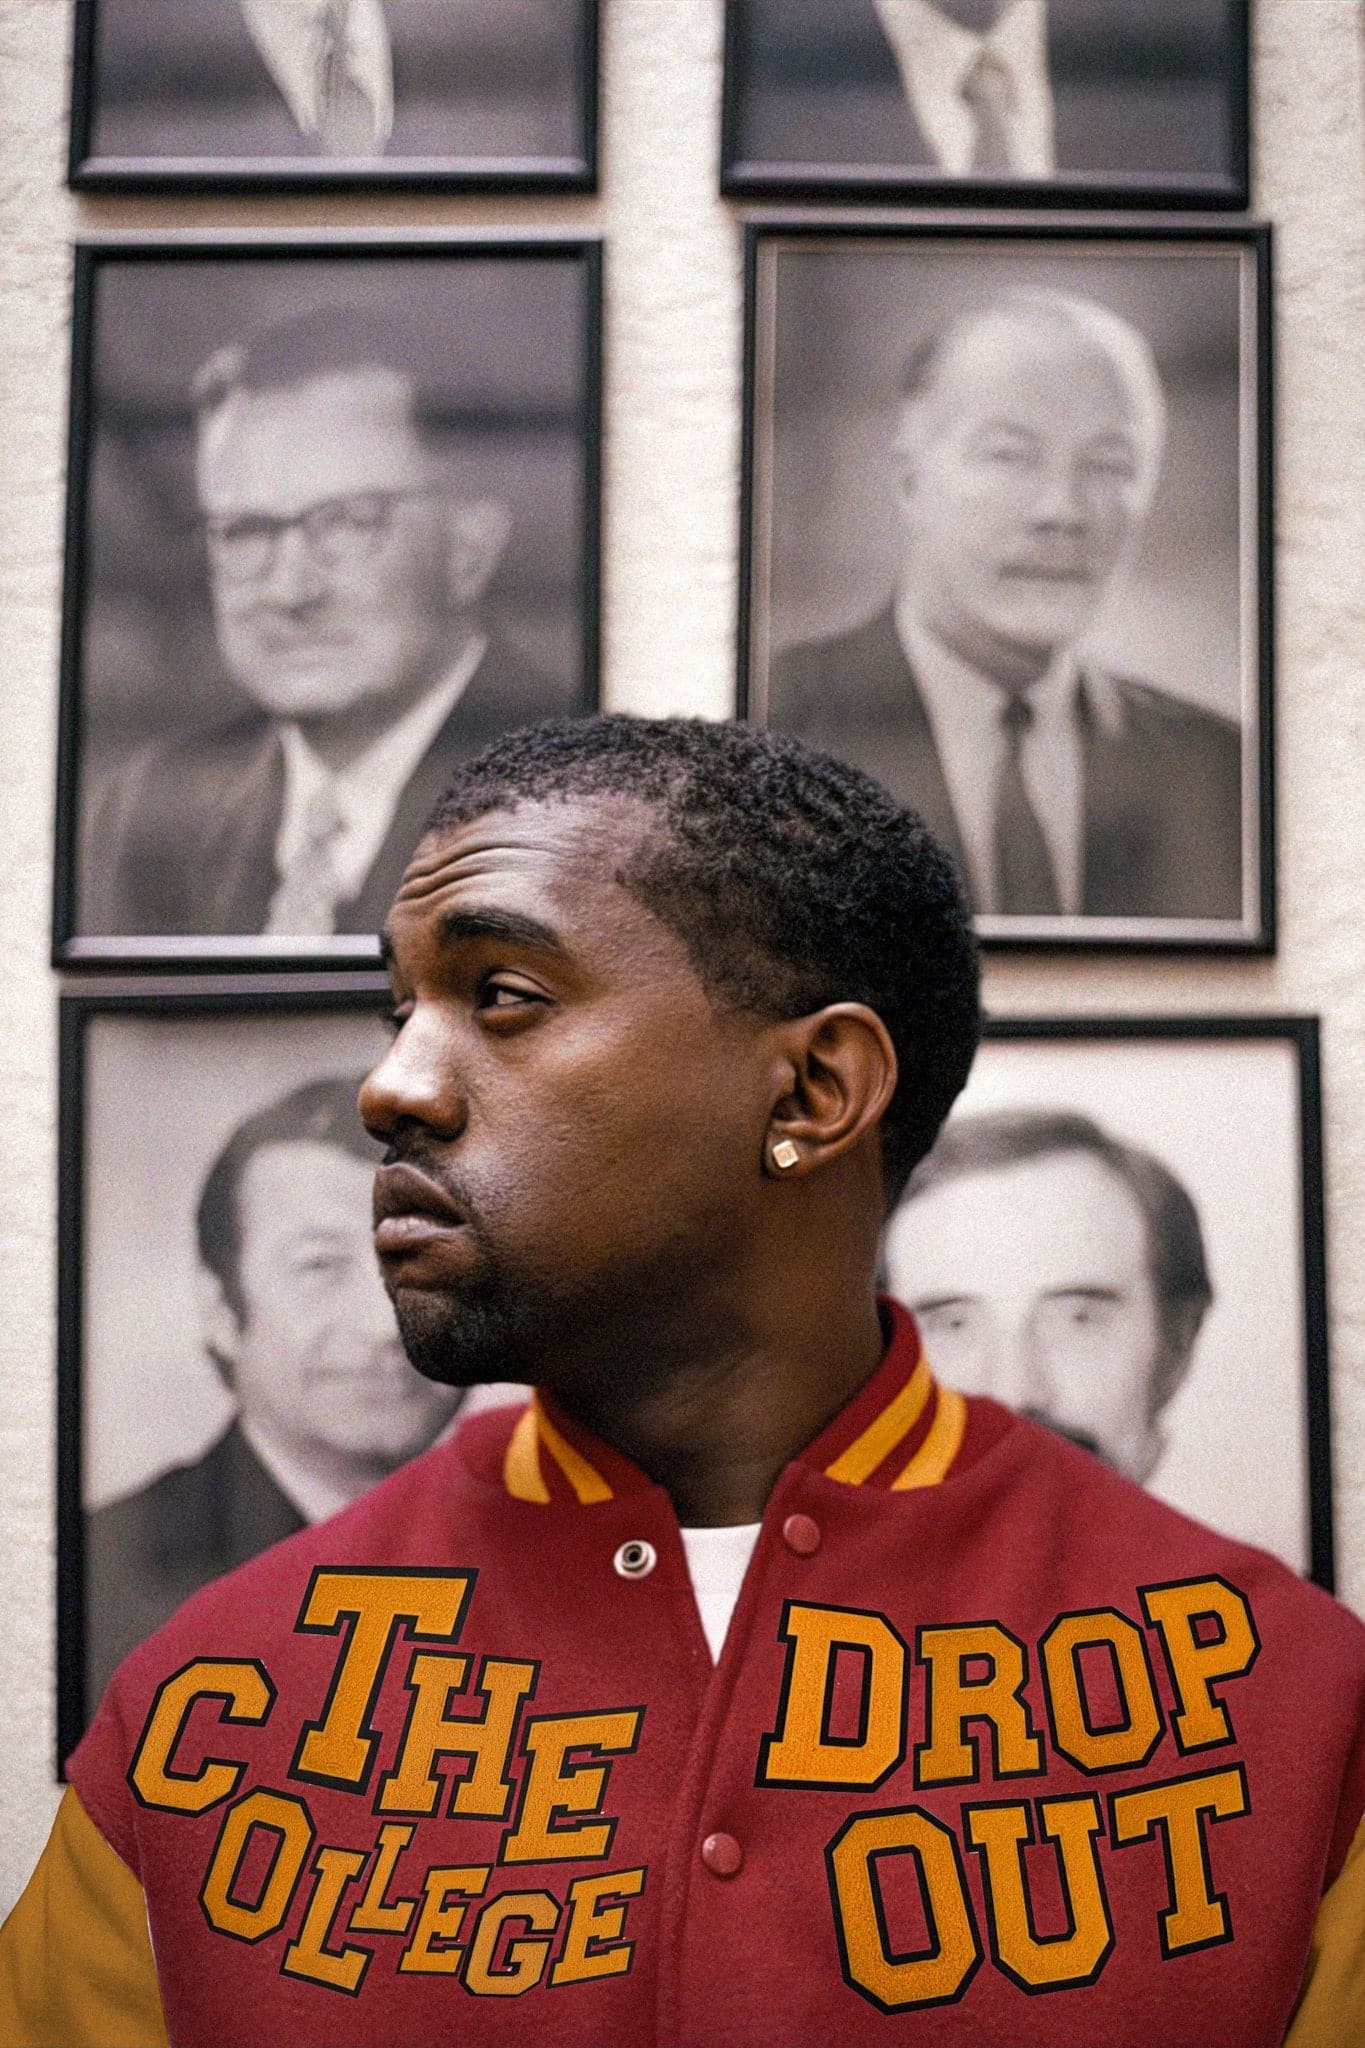 Kanye West 'LV' Poster – Posters Plug